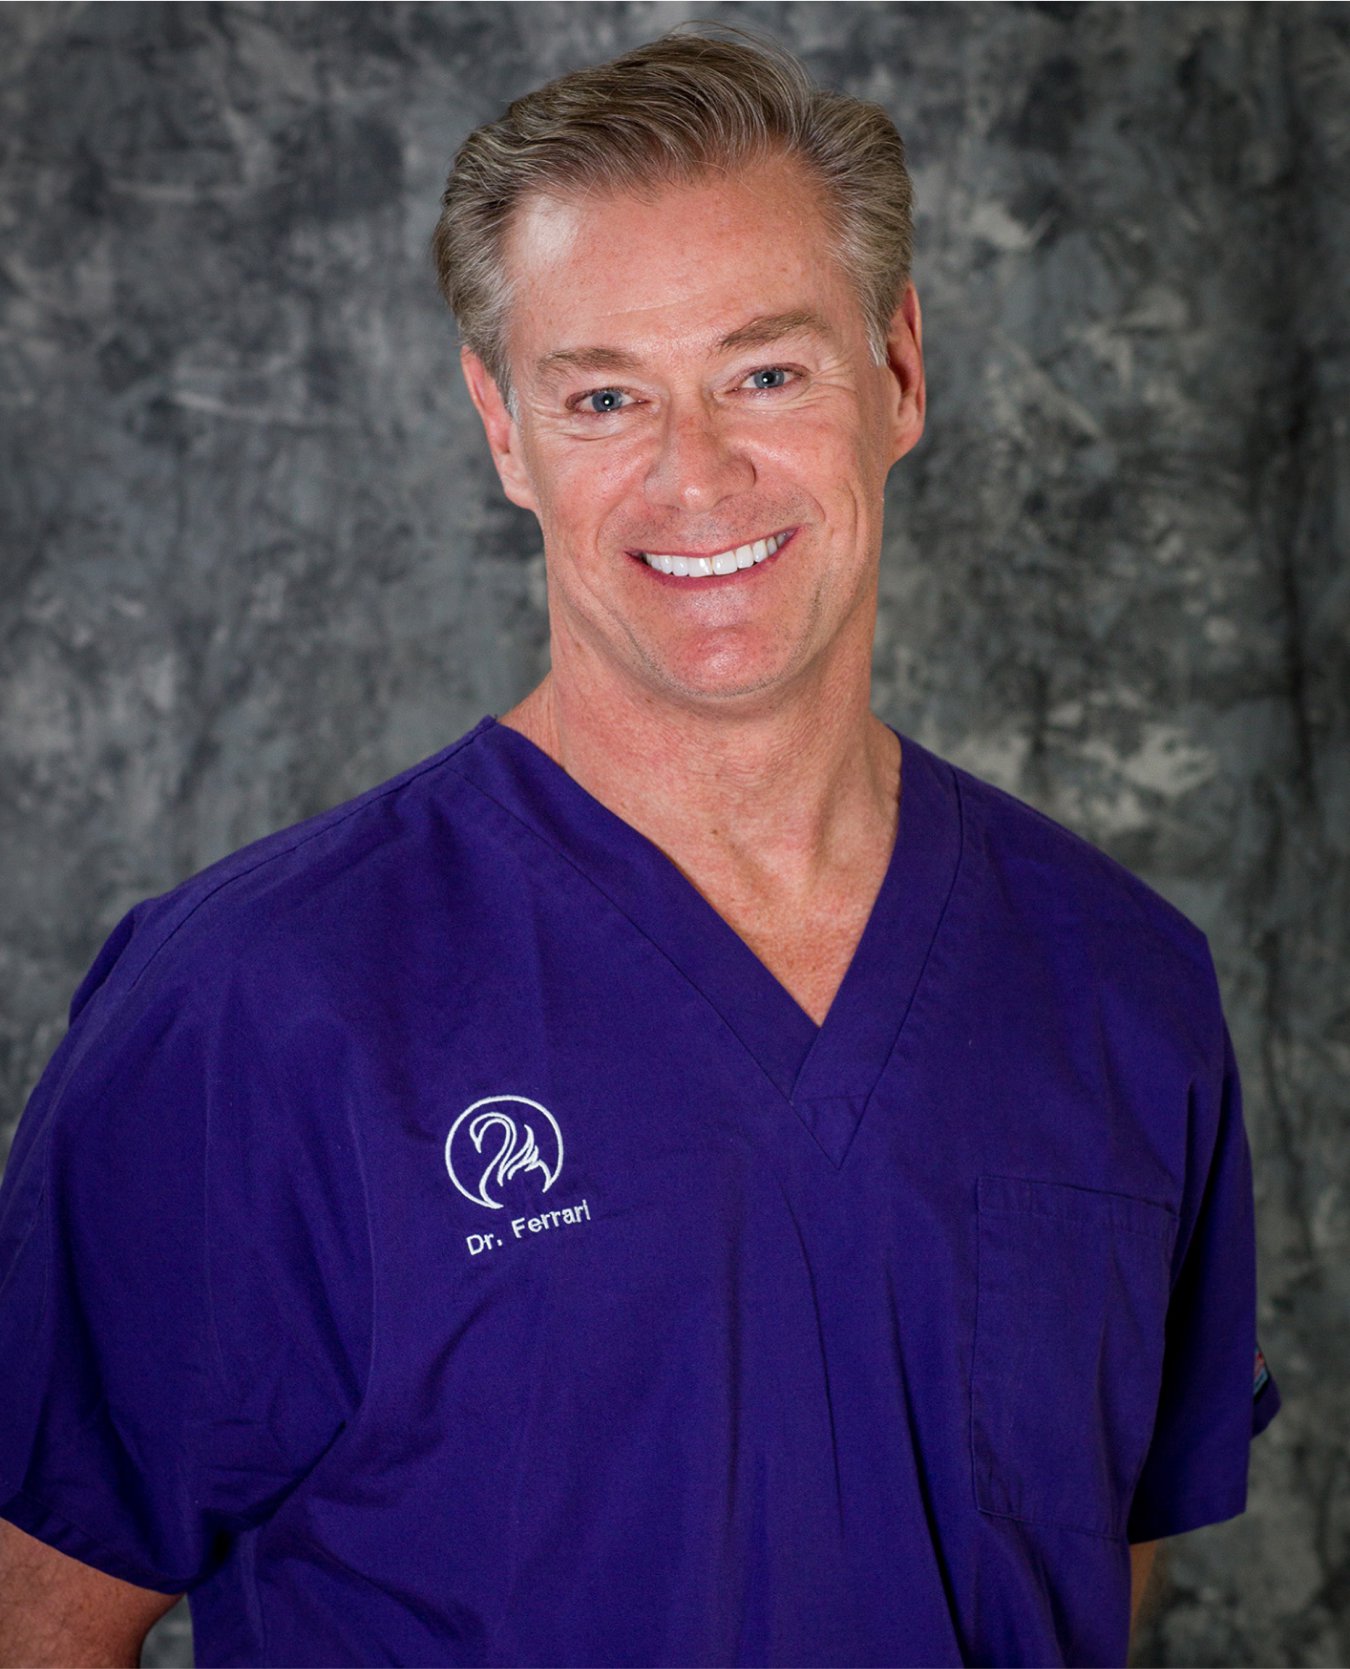 Dr. Ferrari - Breast Reduction Surgeon, Charlotte